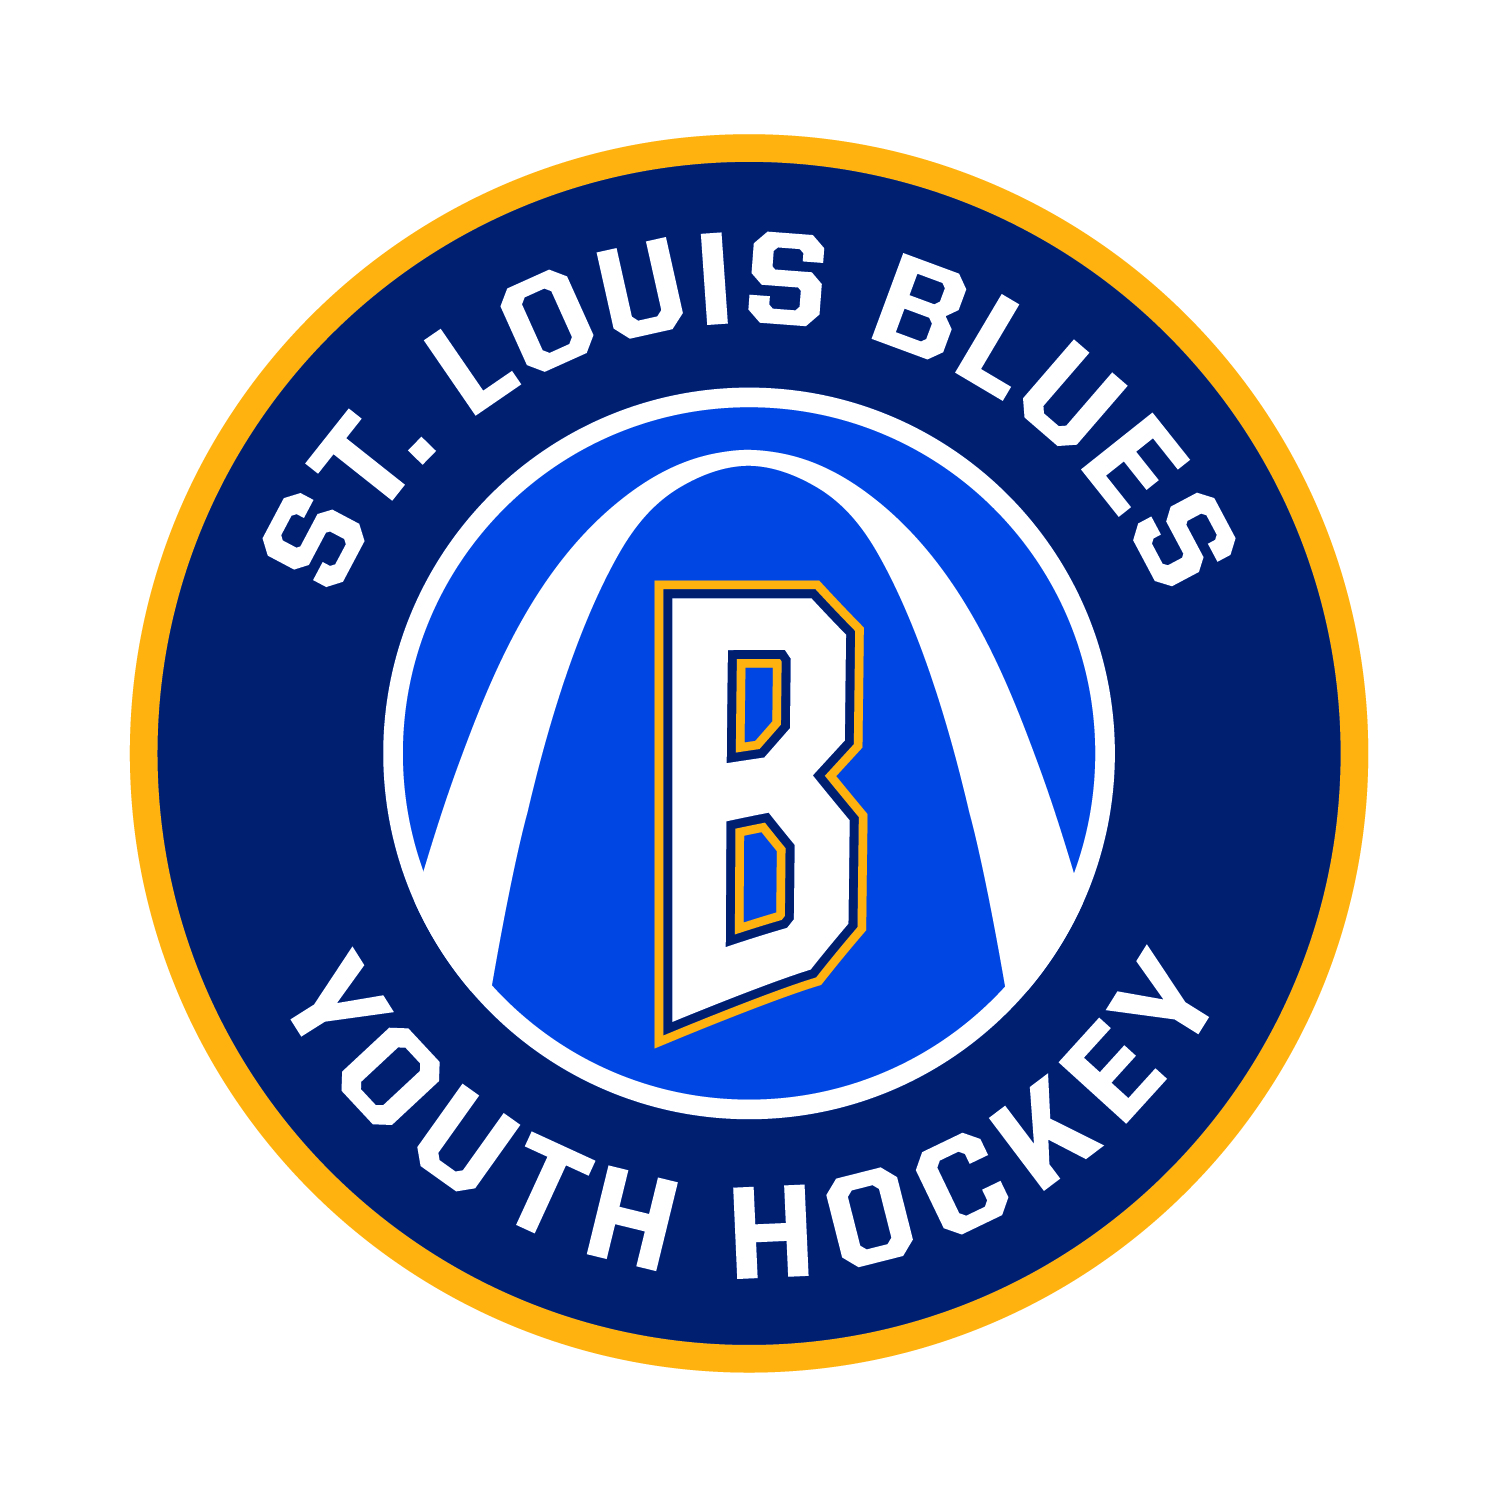 St. Louis Blues Partnership, First Community CU